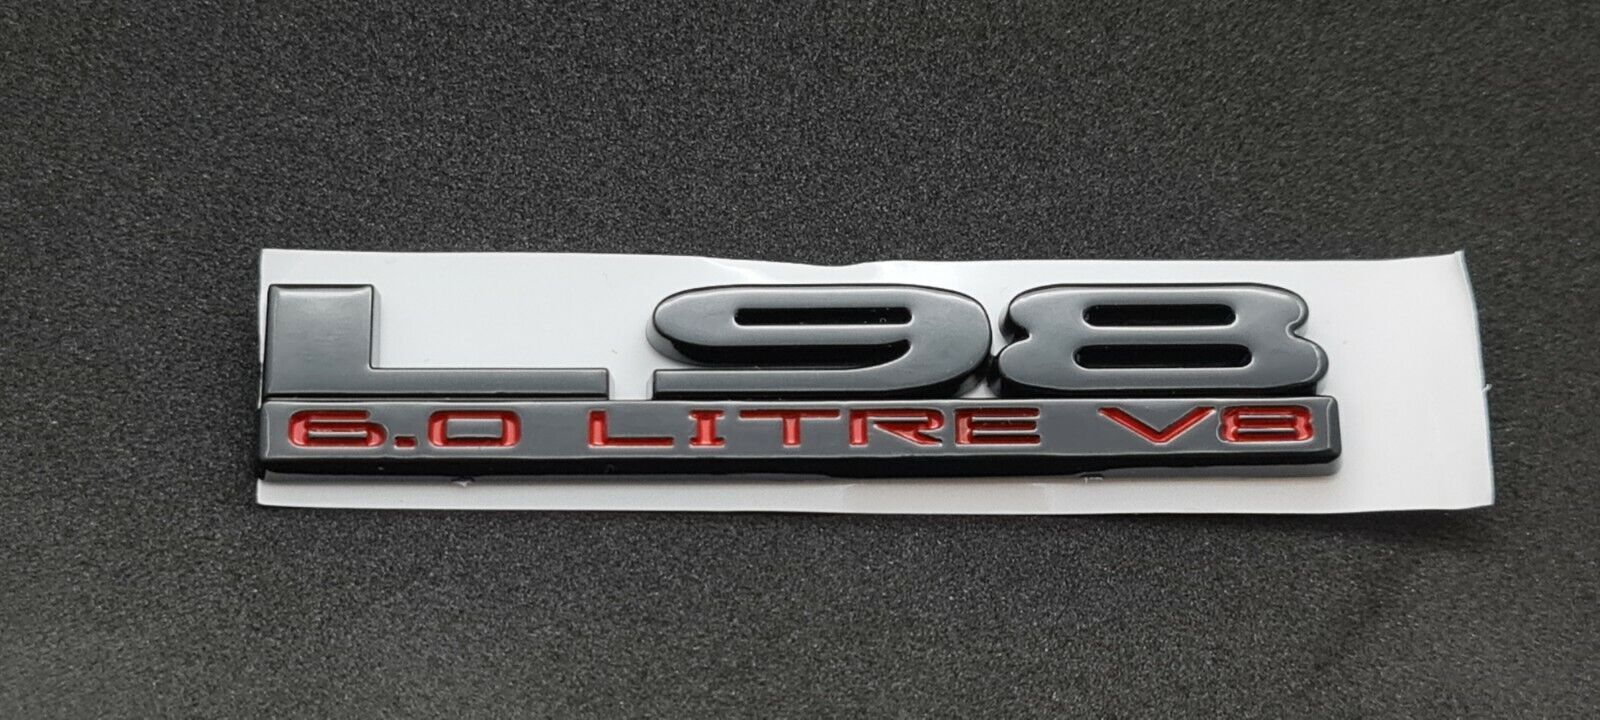 Holden L98 Gloss Black with Red V8 6.0 Litre Badge VZ VE Commodore SS SSV Calais